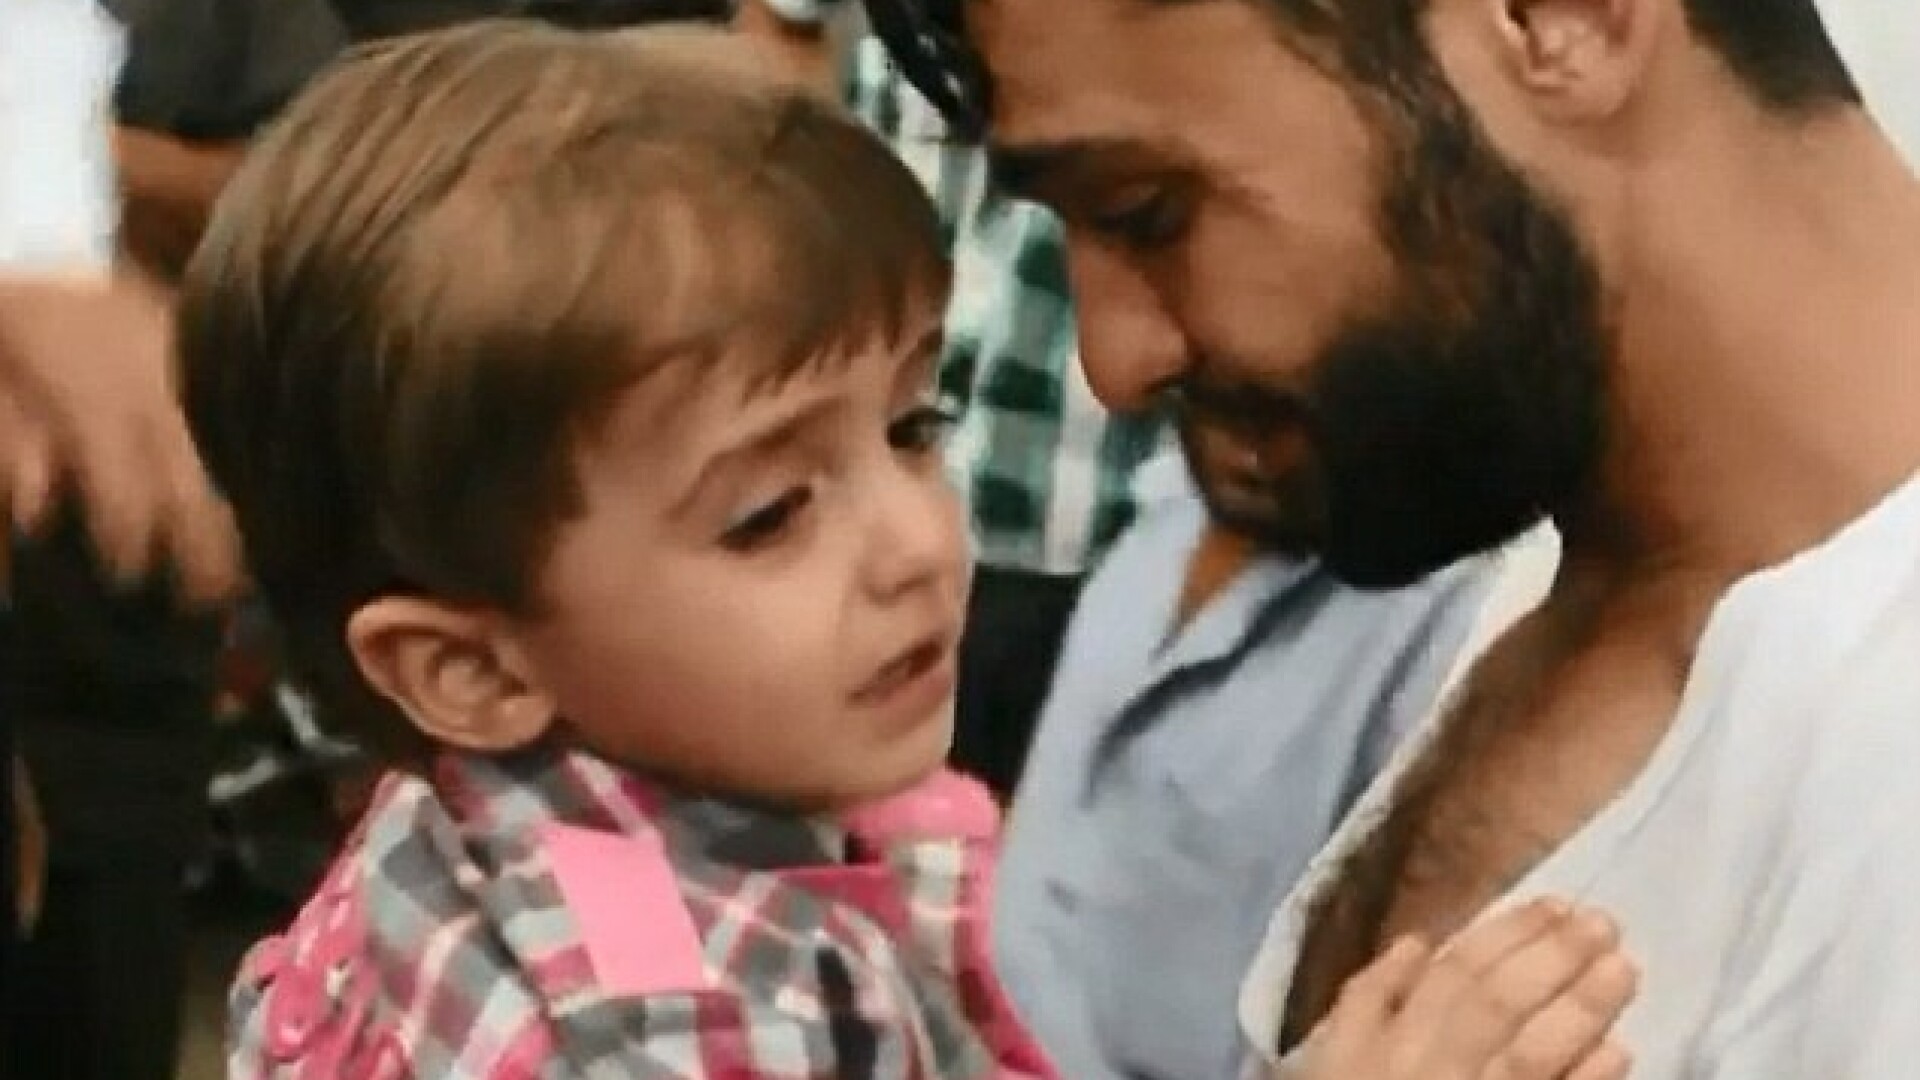 tata isi imbratiseaza copilul, Siria